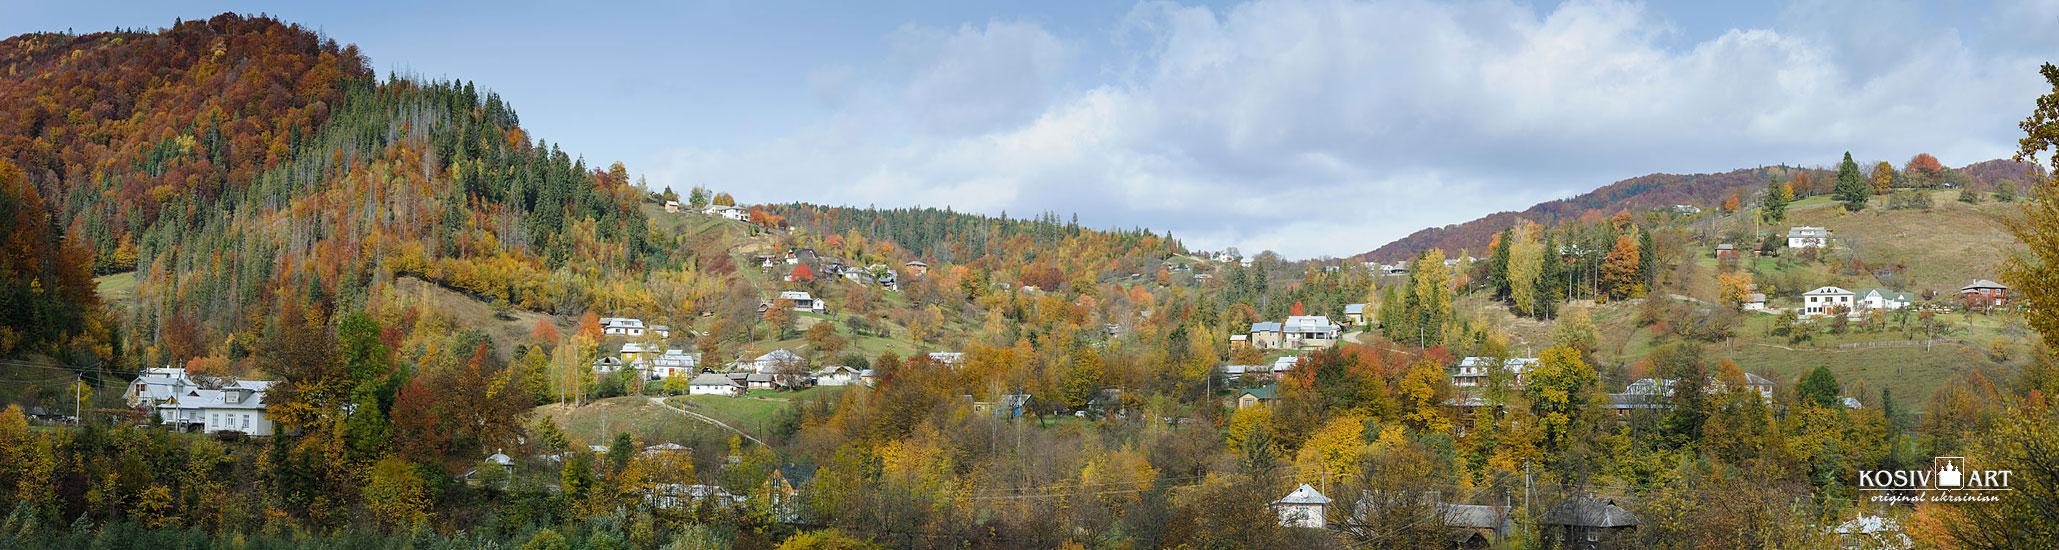 Sokolivka village